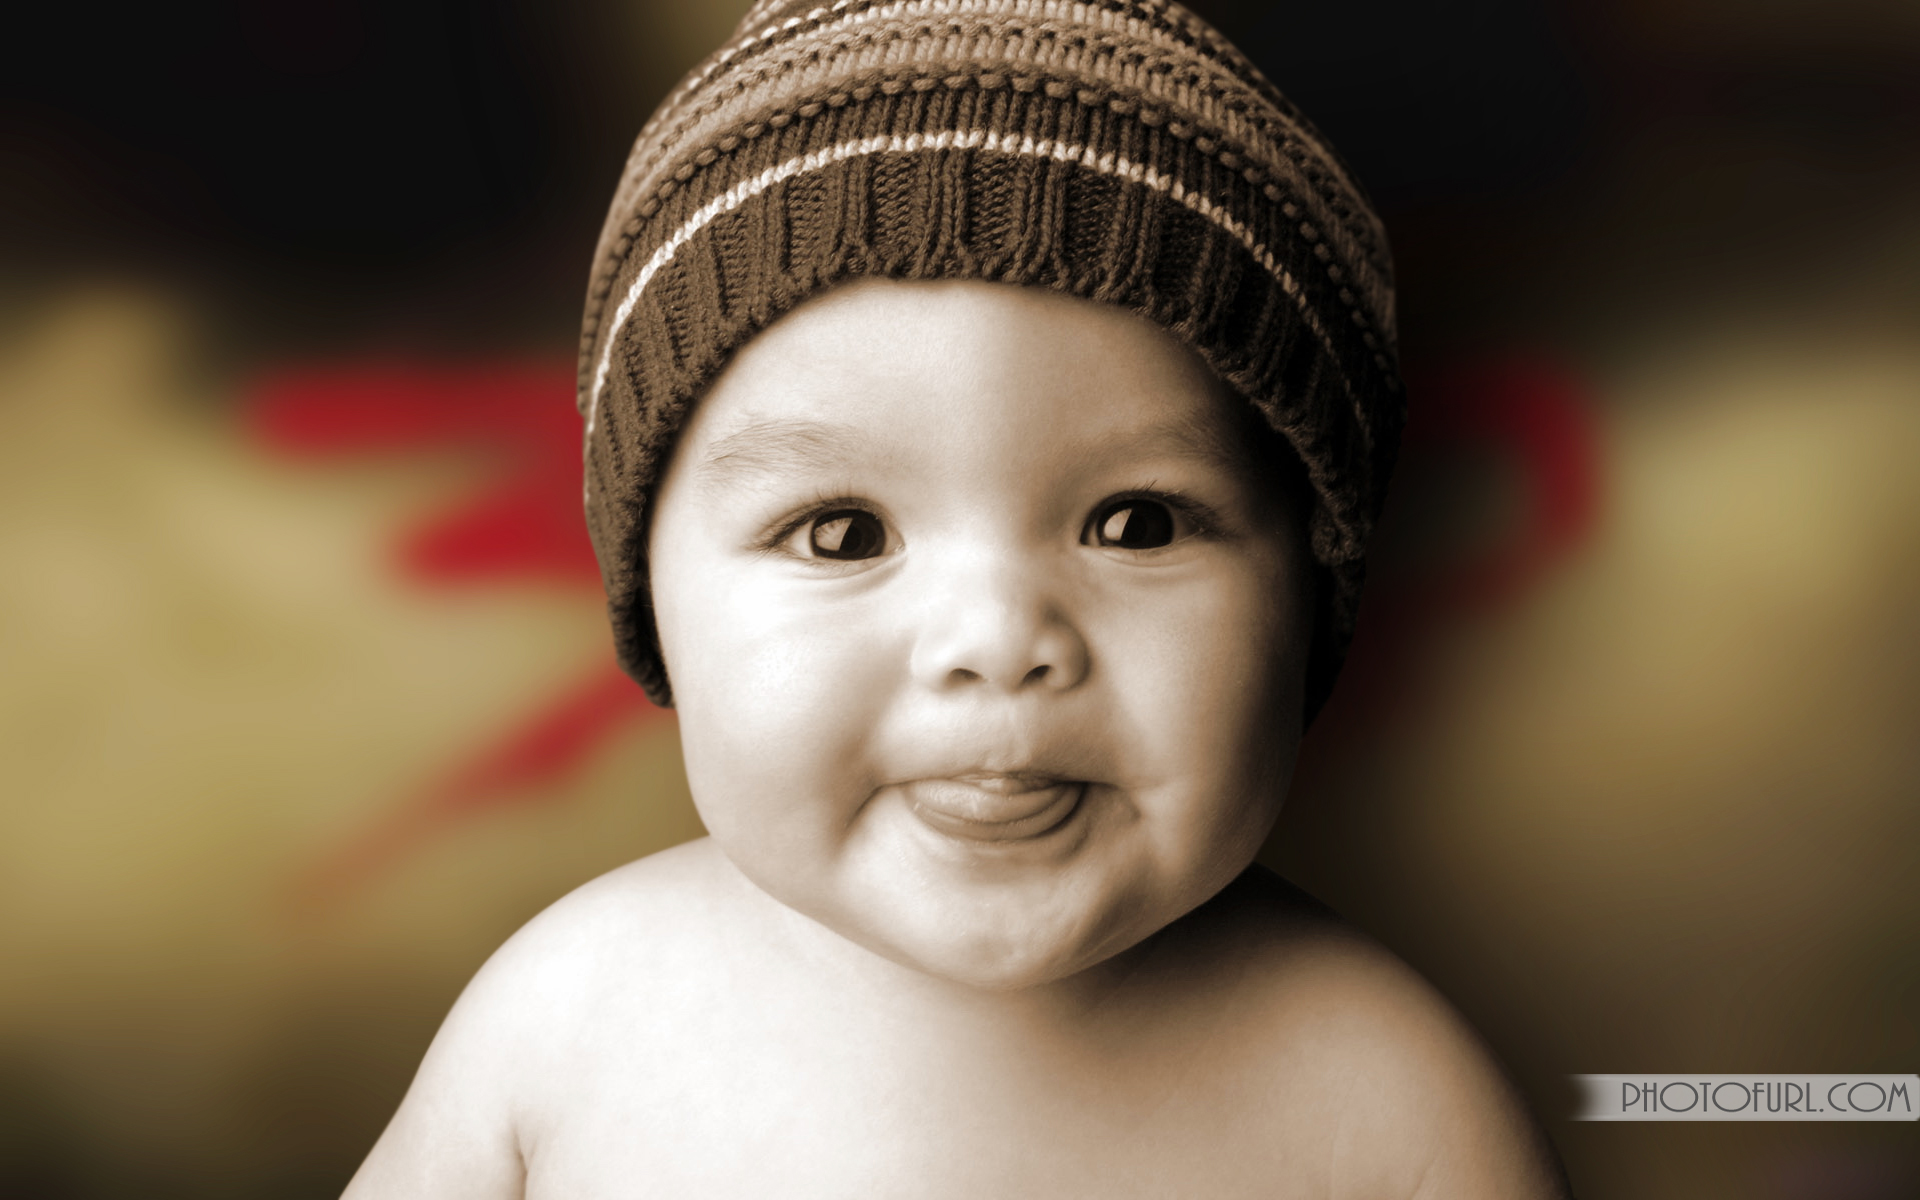 Pics Photos   Cute Babies Wallpapers For Desktop